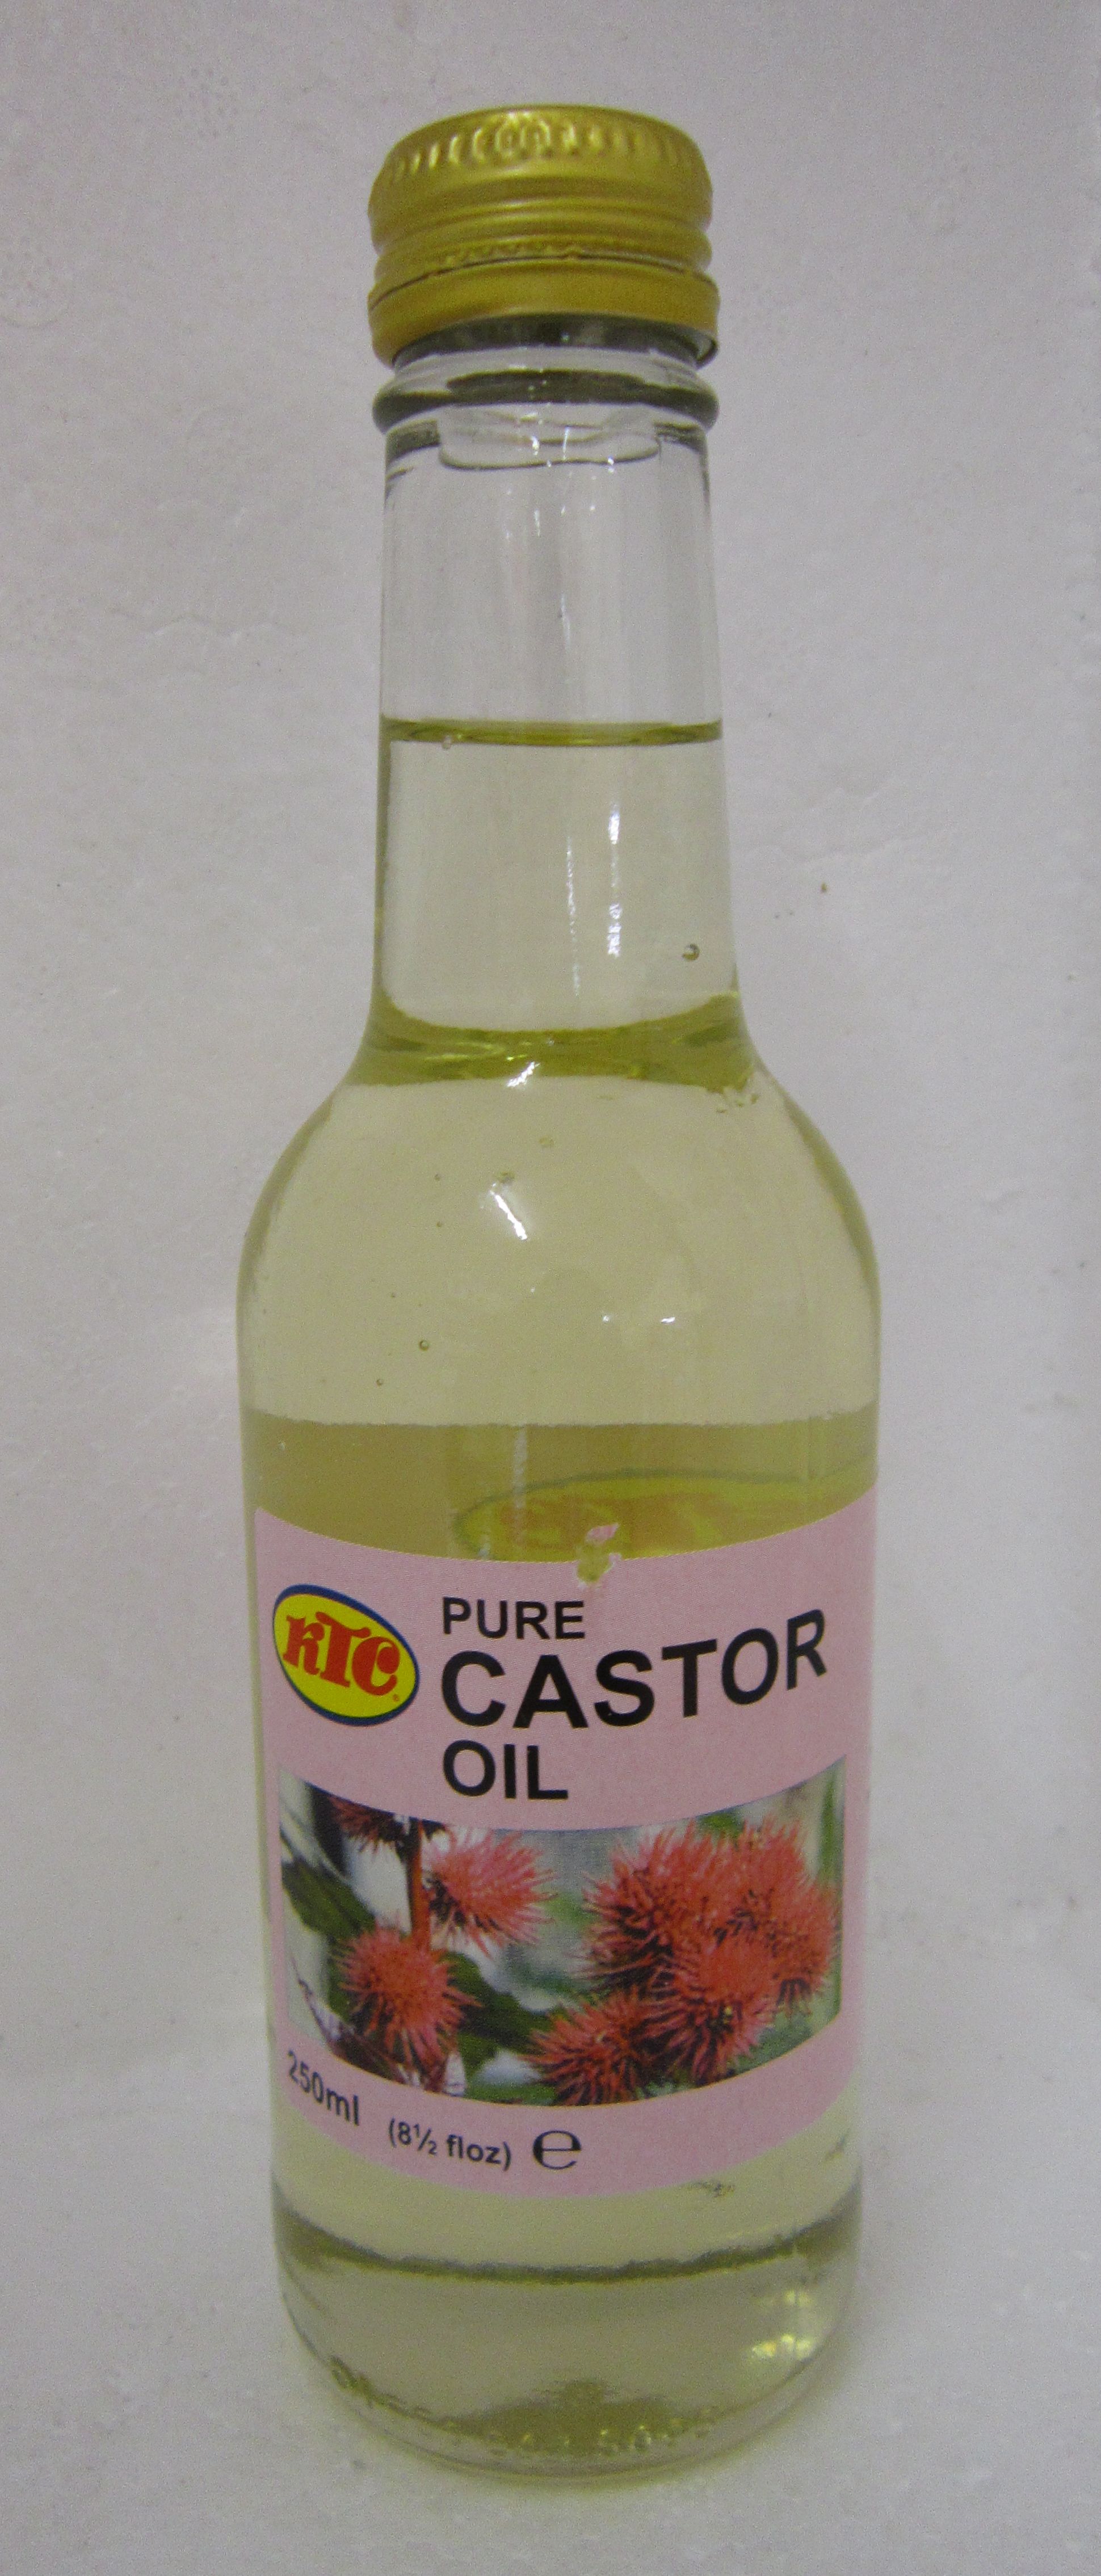 KTC Pure Castor Oil Image